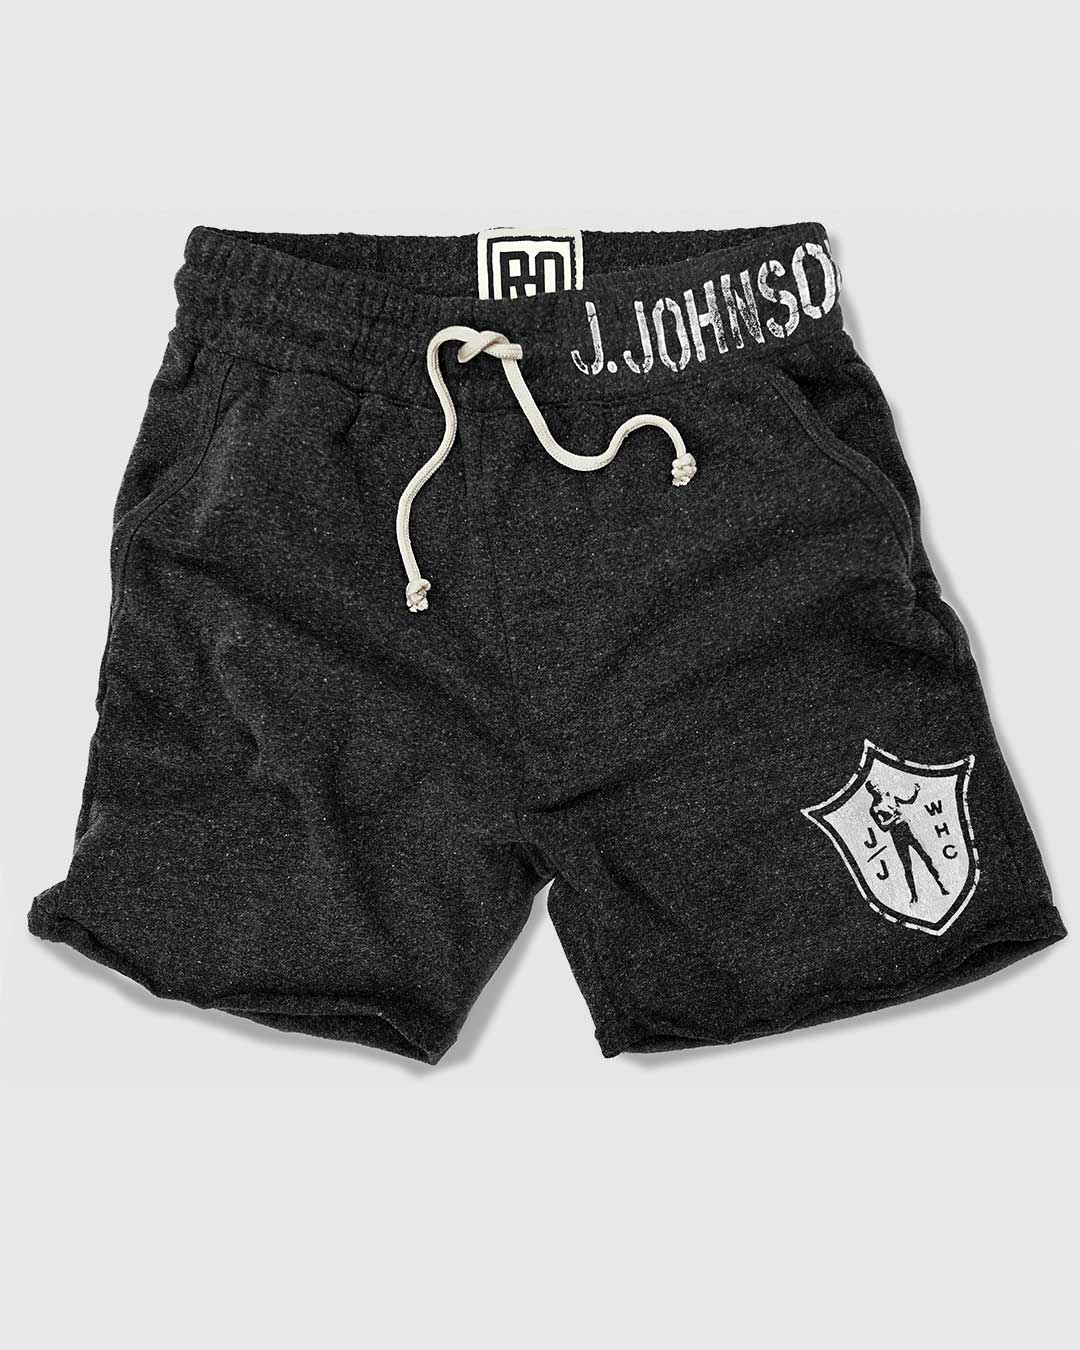 Jack Johnson Emblem Shorts - Roots of Fight